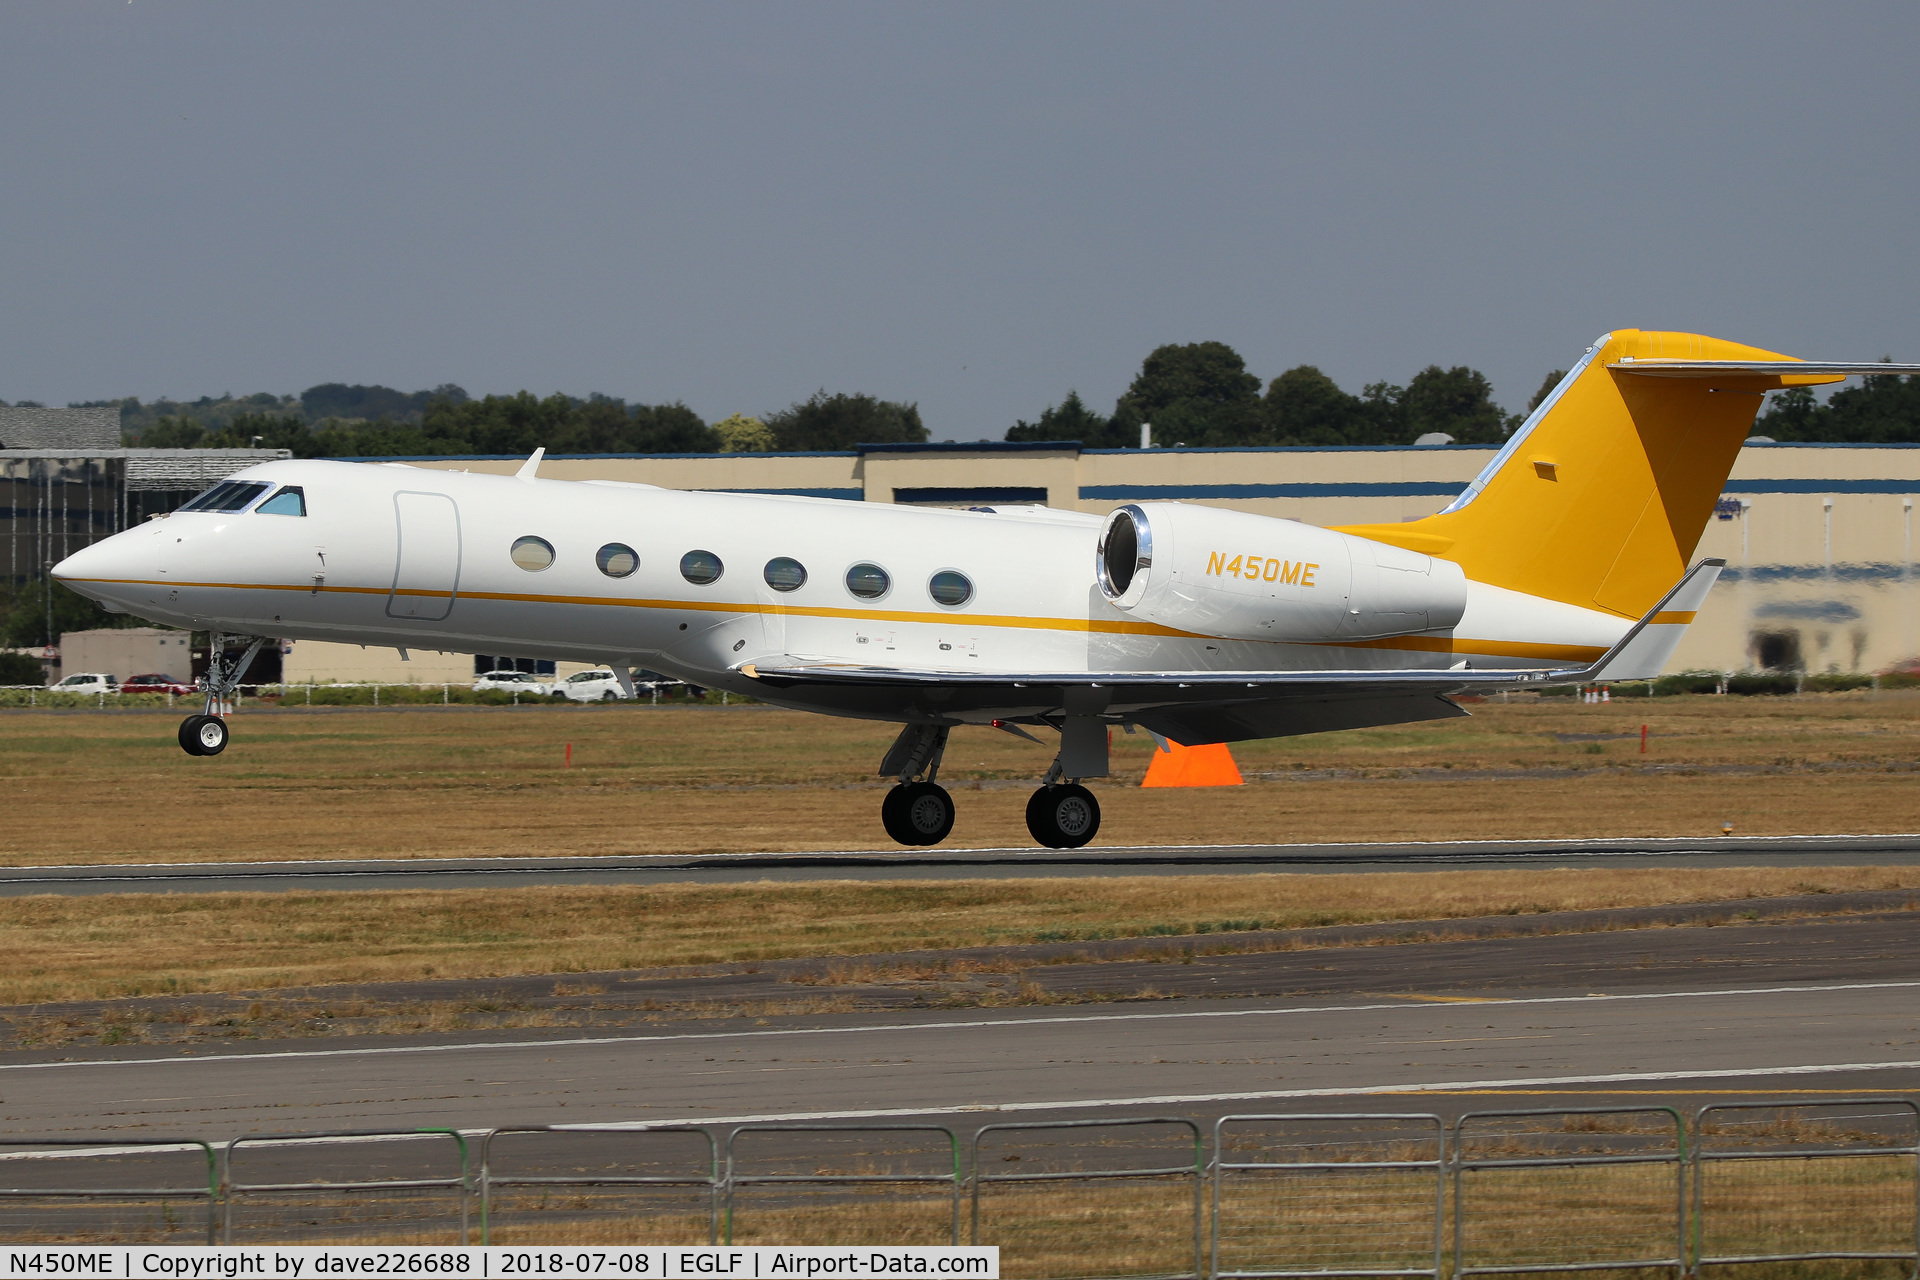 N450ME, 2015 Gulfstream Aerospace GIV-X (G450) C/N 4361, 53 Wildcat LLc G450 landing at Farnborough a week before F.I.A 2018